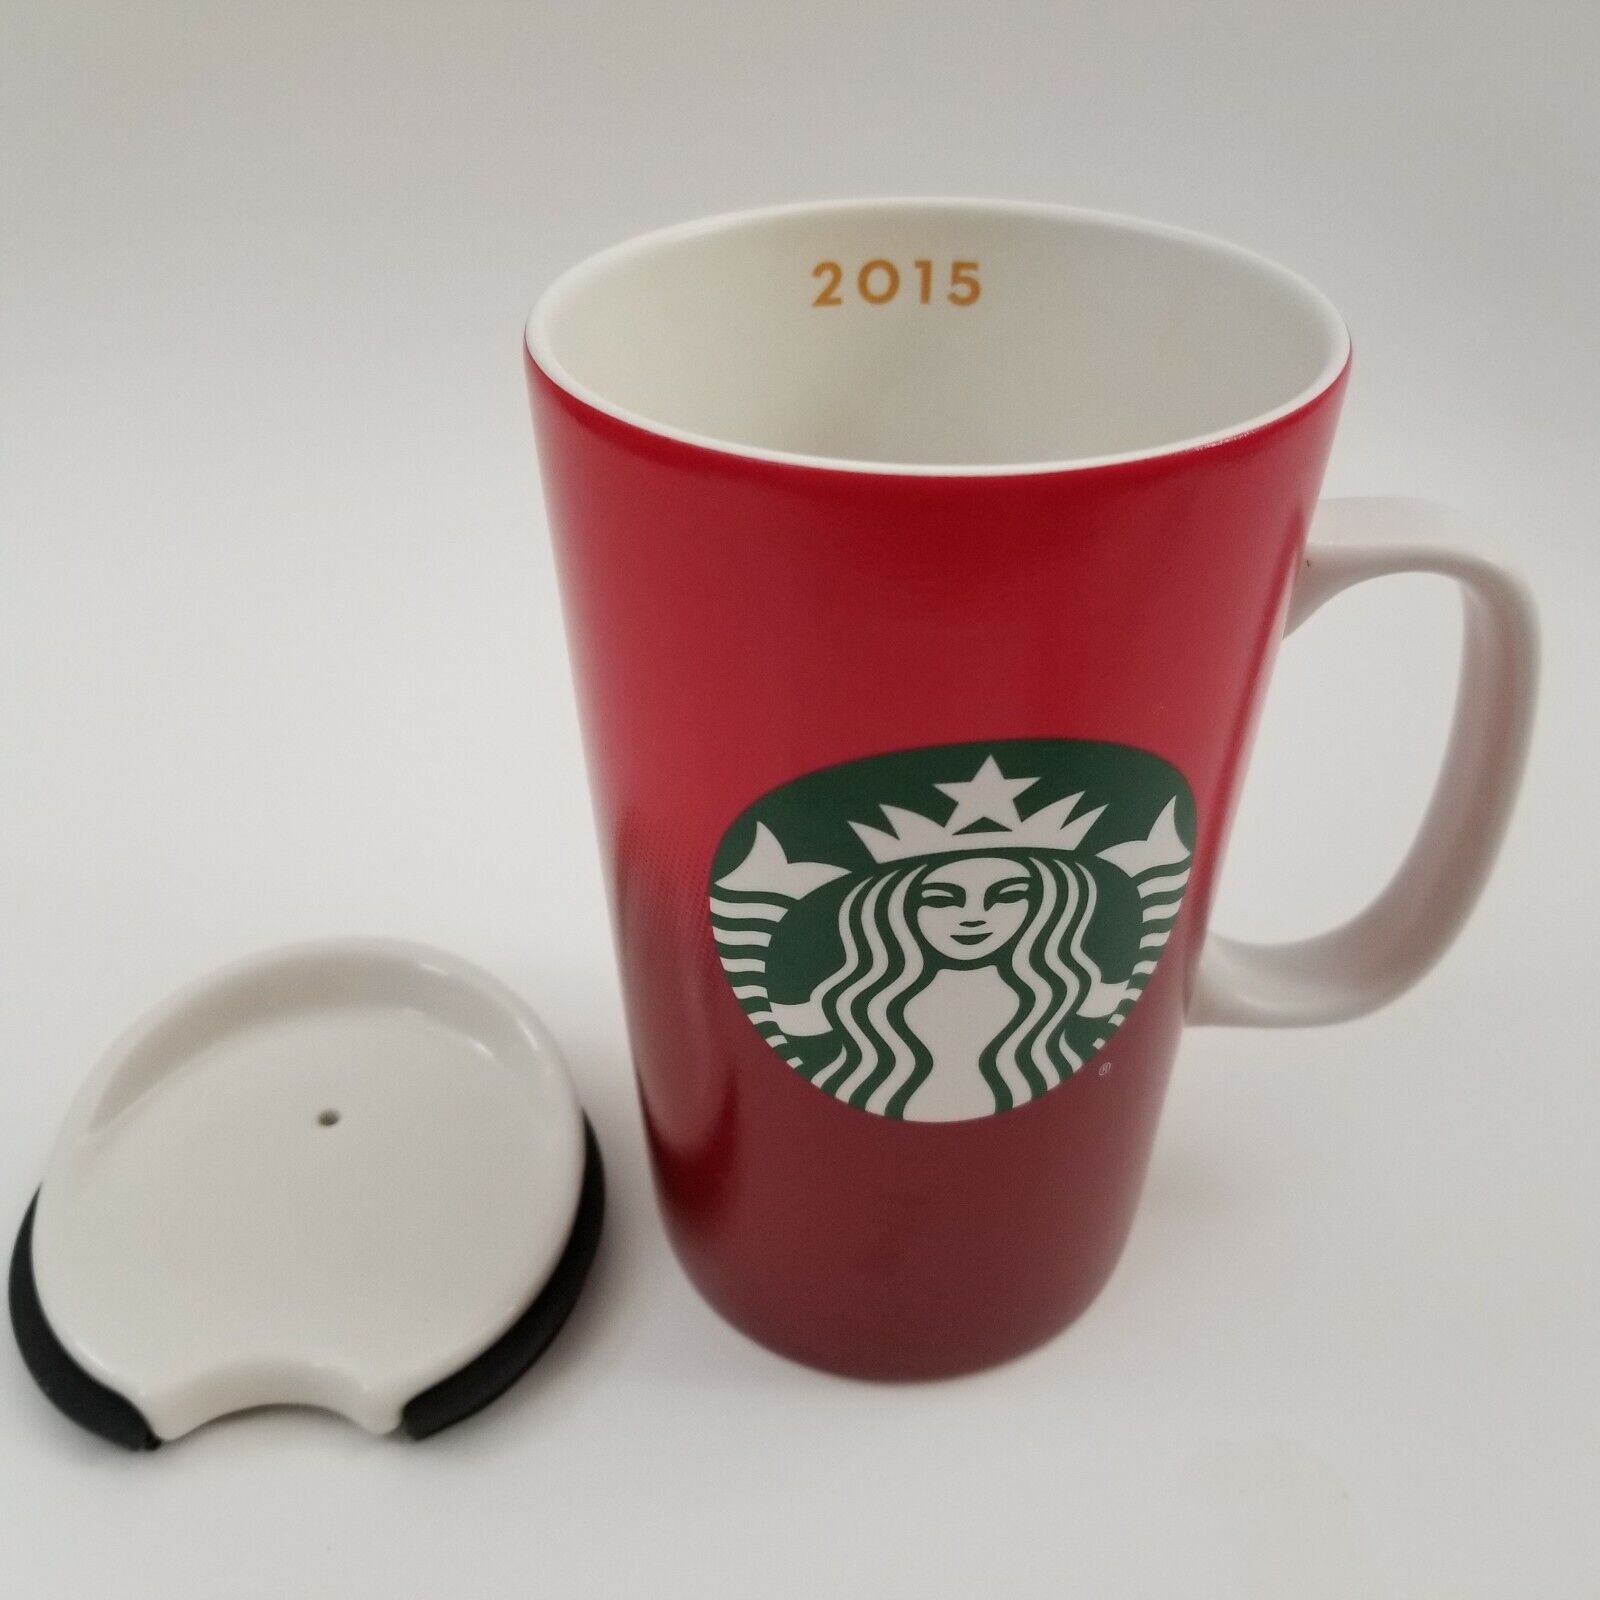 Starbucks 2015 Red Holiday Christmas Ceramic Cup Mug 16 Fl Oz with Lid